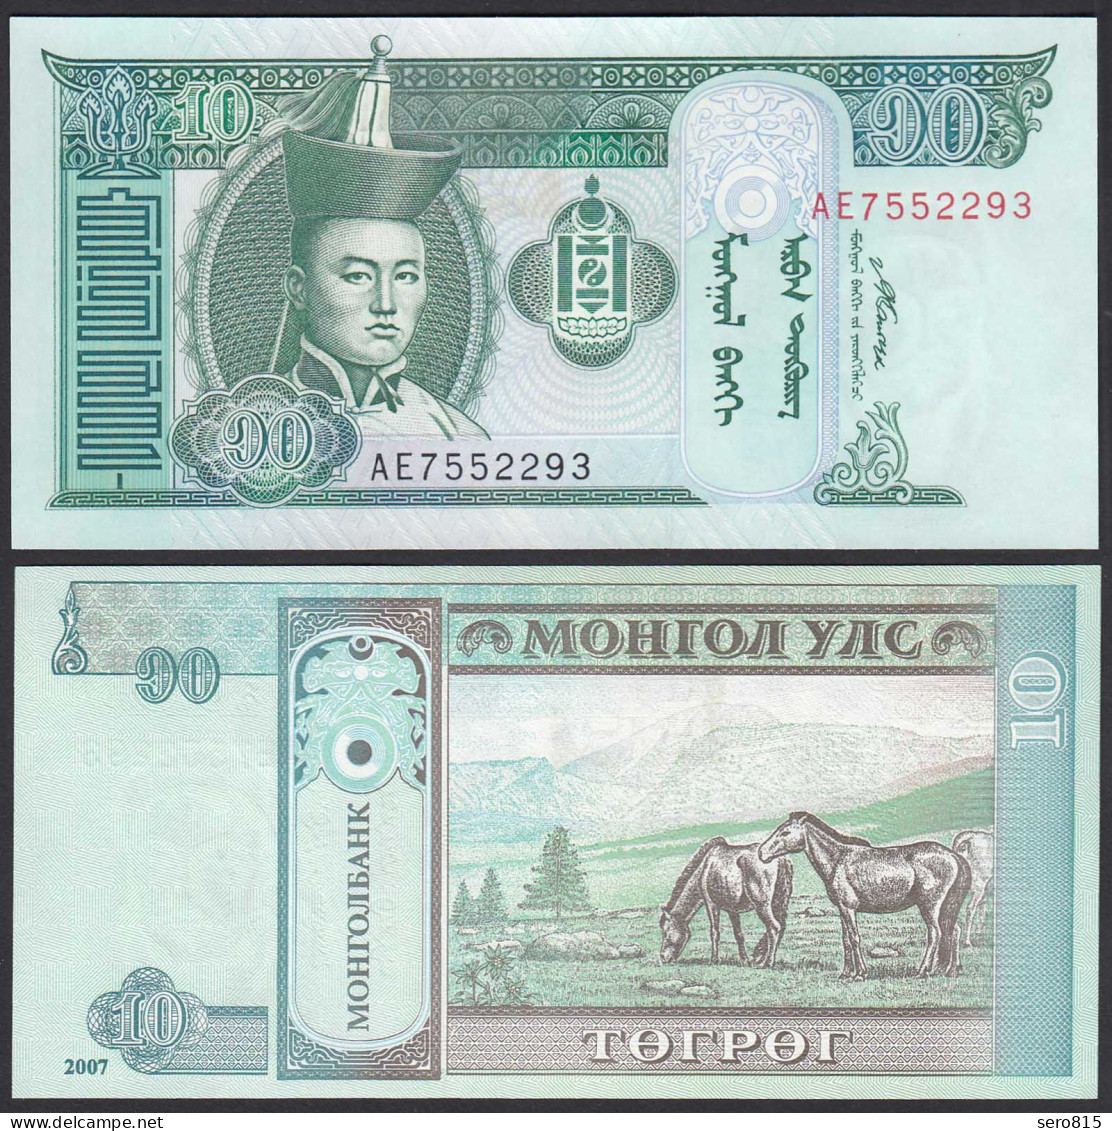 Mongolei - Mongolia 10 Tugrik Banknote 1993 Pick 54 UNC (1)   (30163 - Andere - Azië